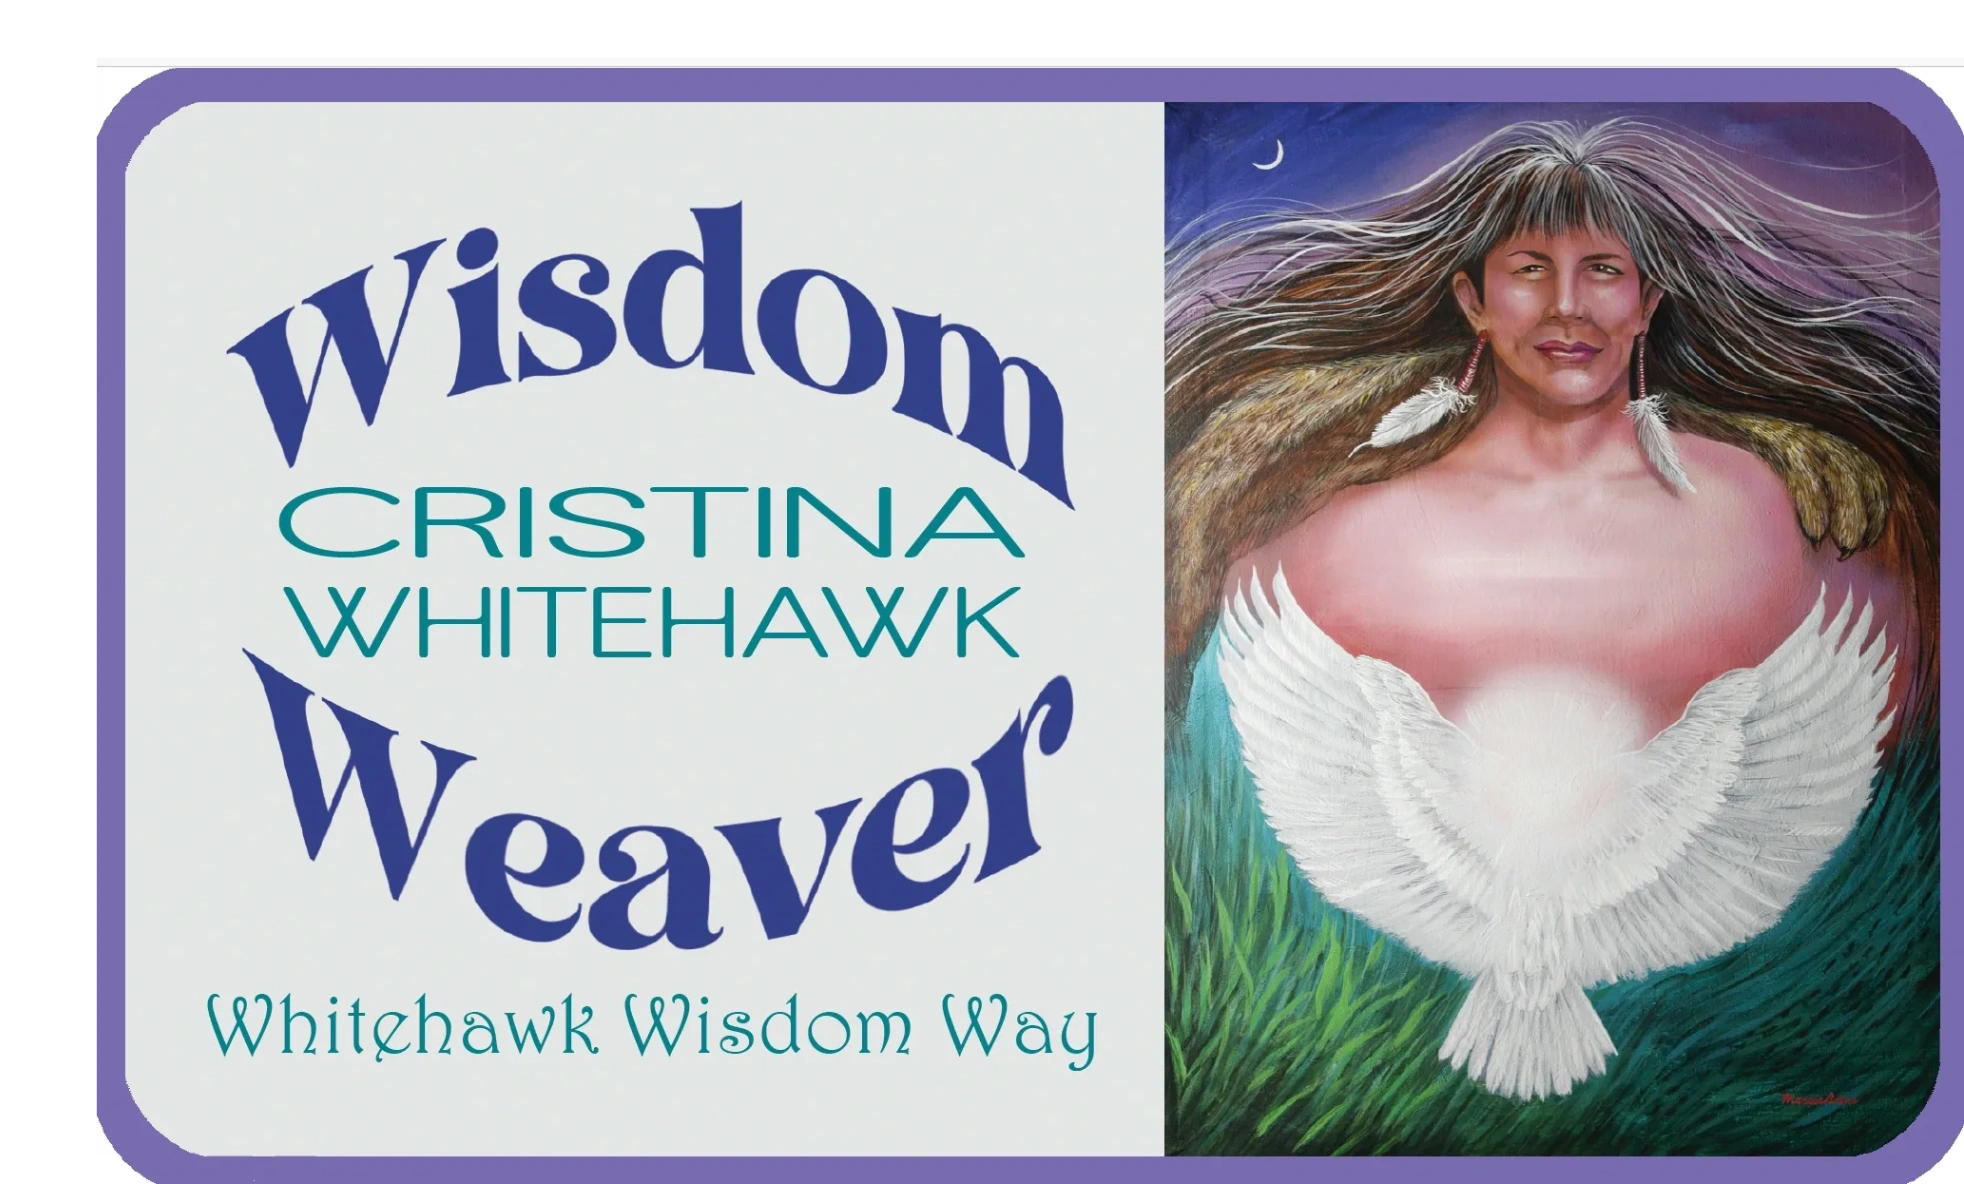 Wisdom Weaver logo
painting by Marcia Diane